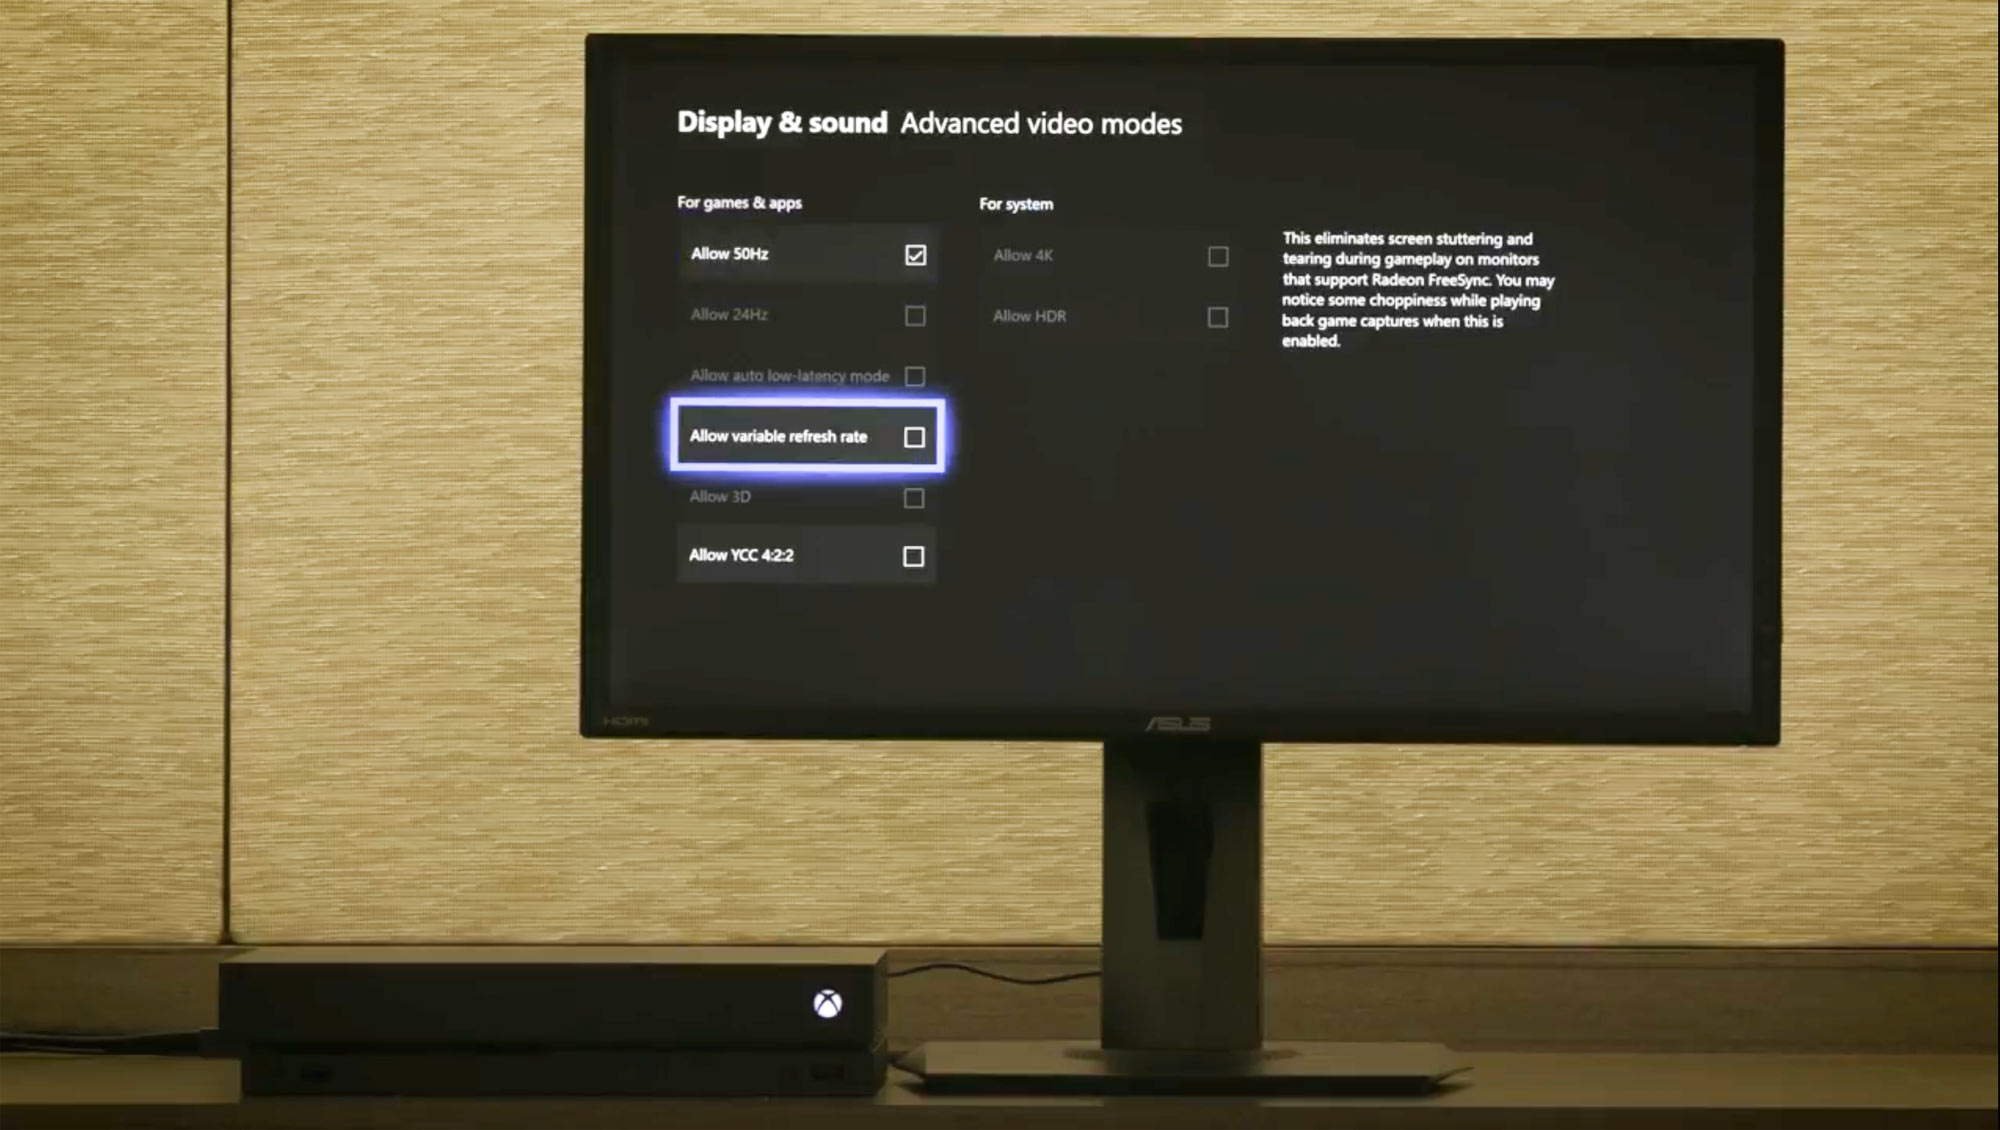 Bourgeon Descarga ciervo Xbox One S & X to gain FreeSync, 1440p & HDMI 2.1's ALLM feature -  FlatpanelsHD